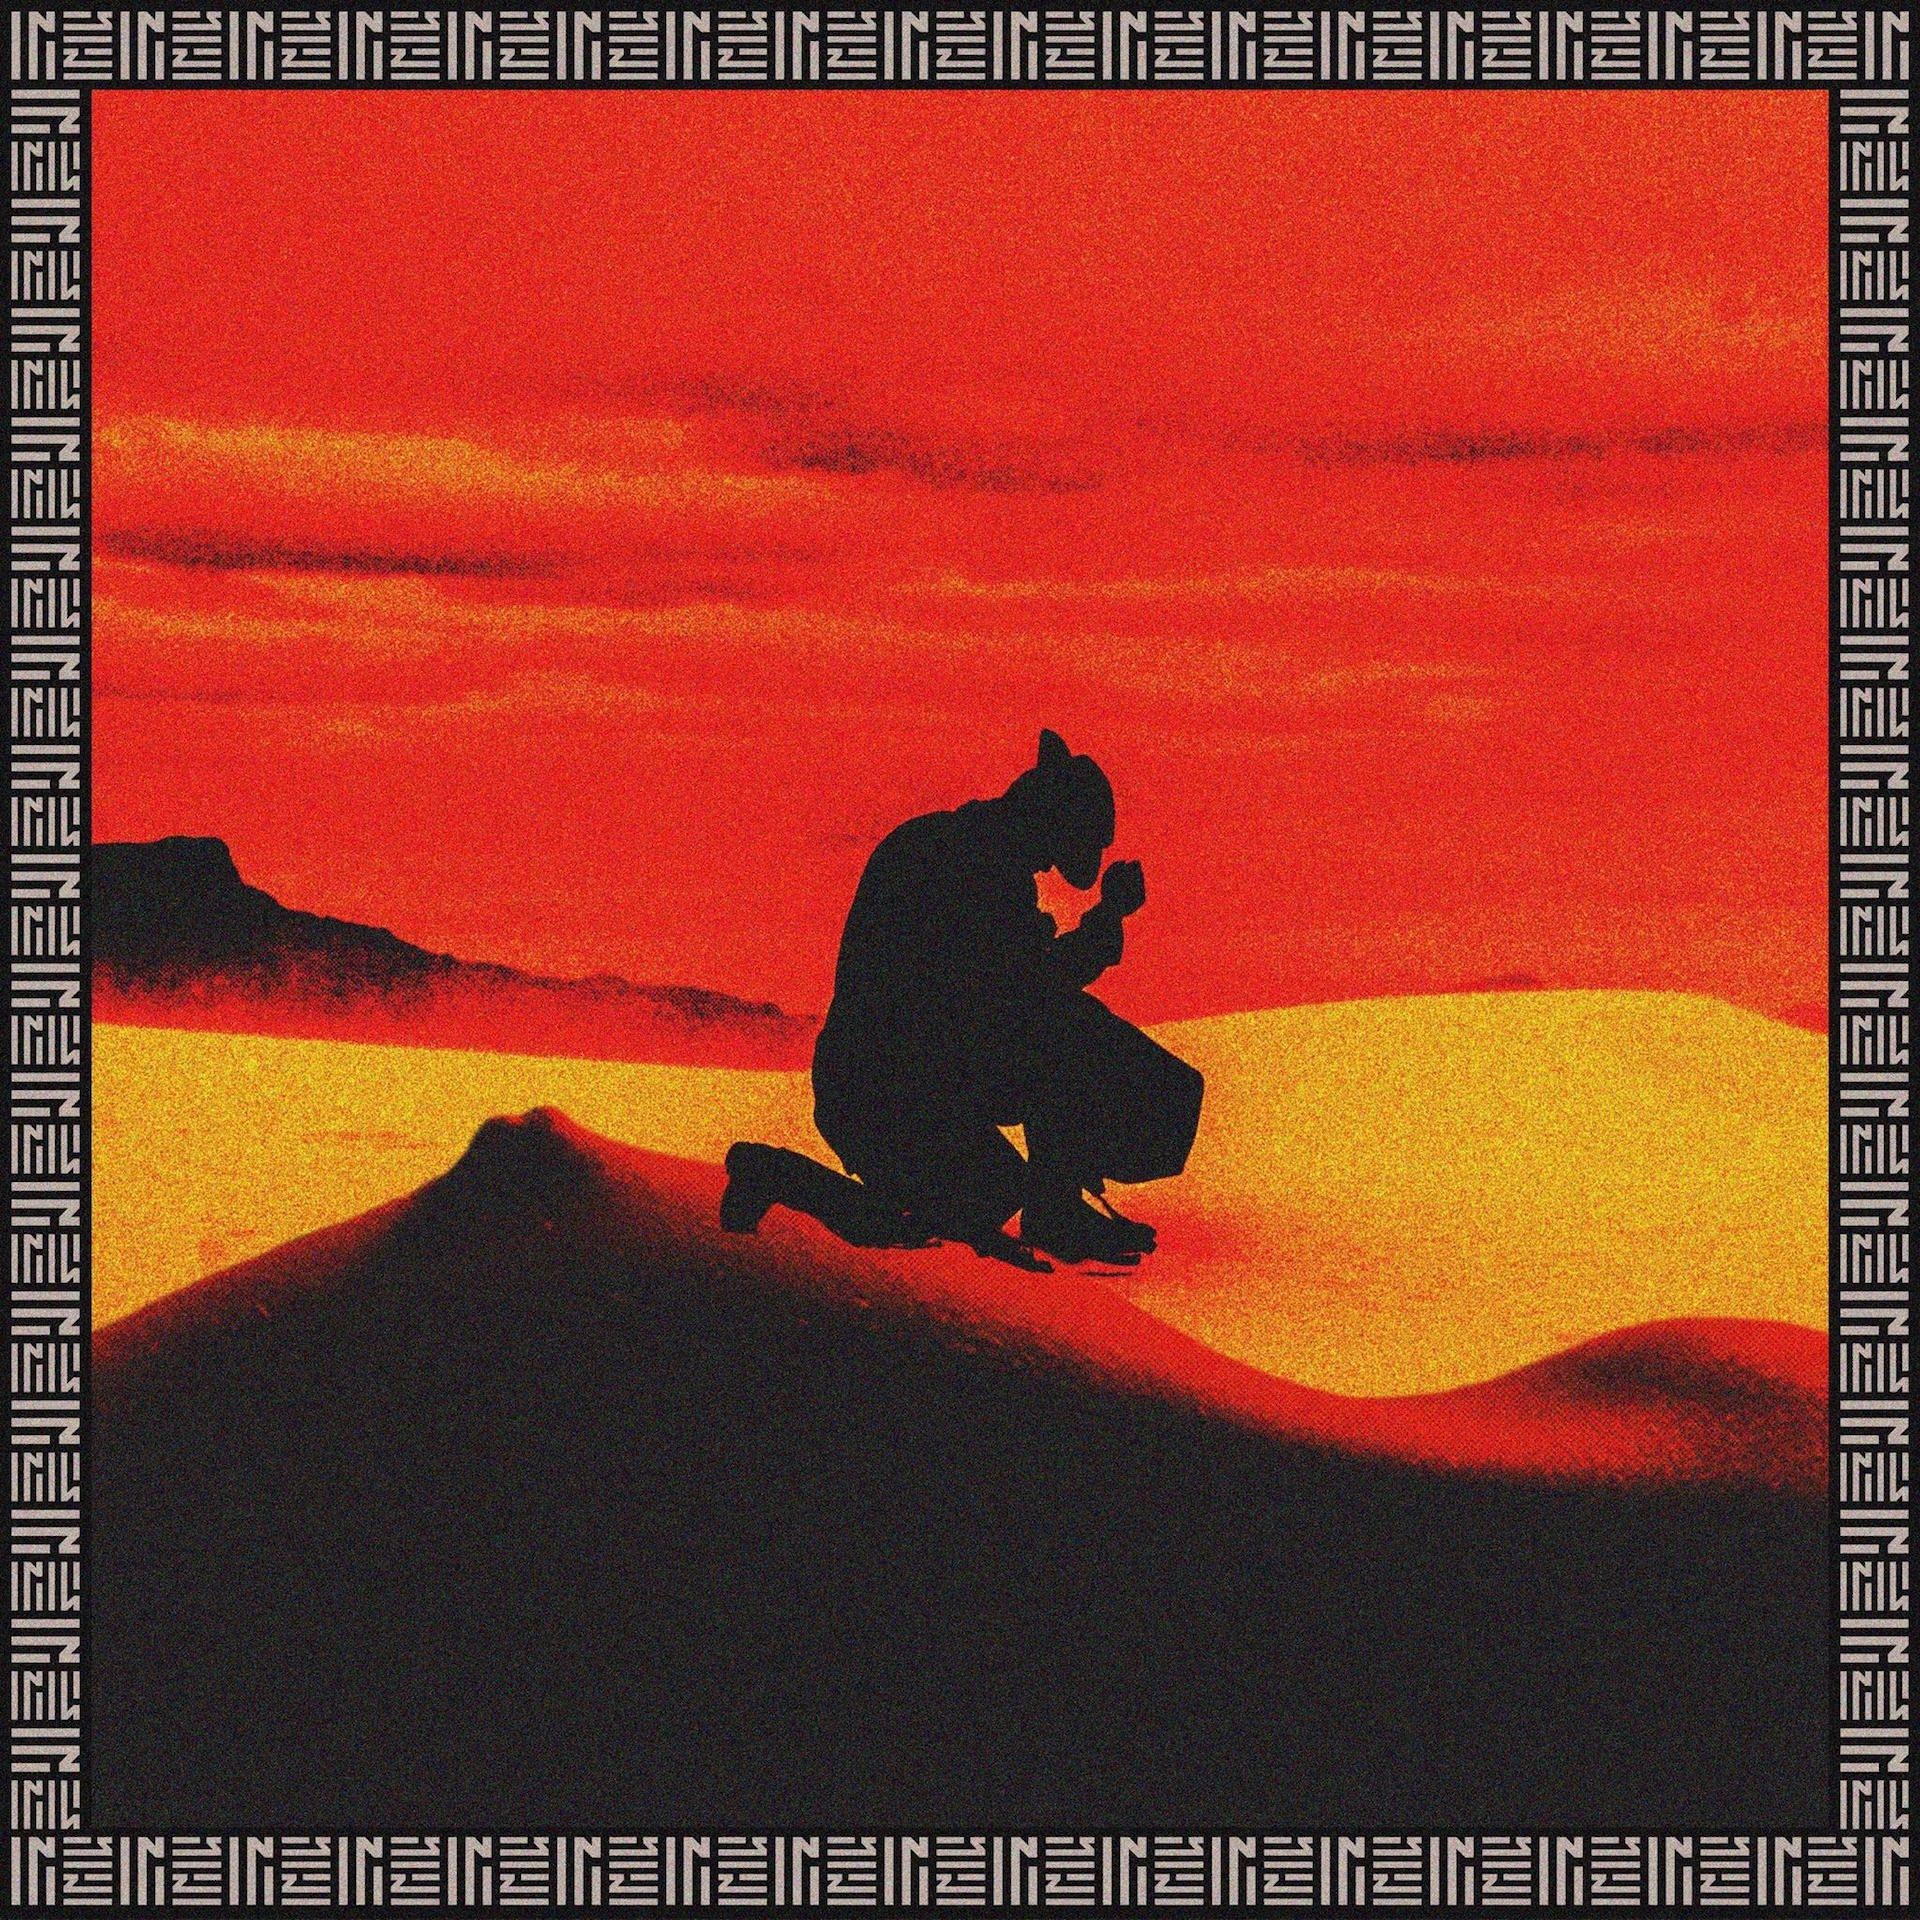 Imagem do álbum Ringos Desert do(a) artista Zhu